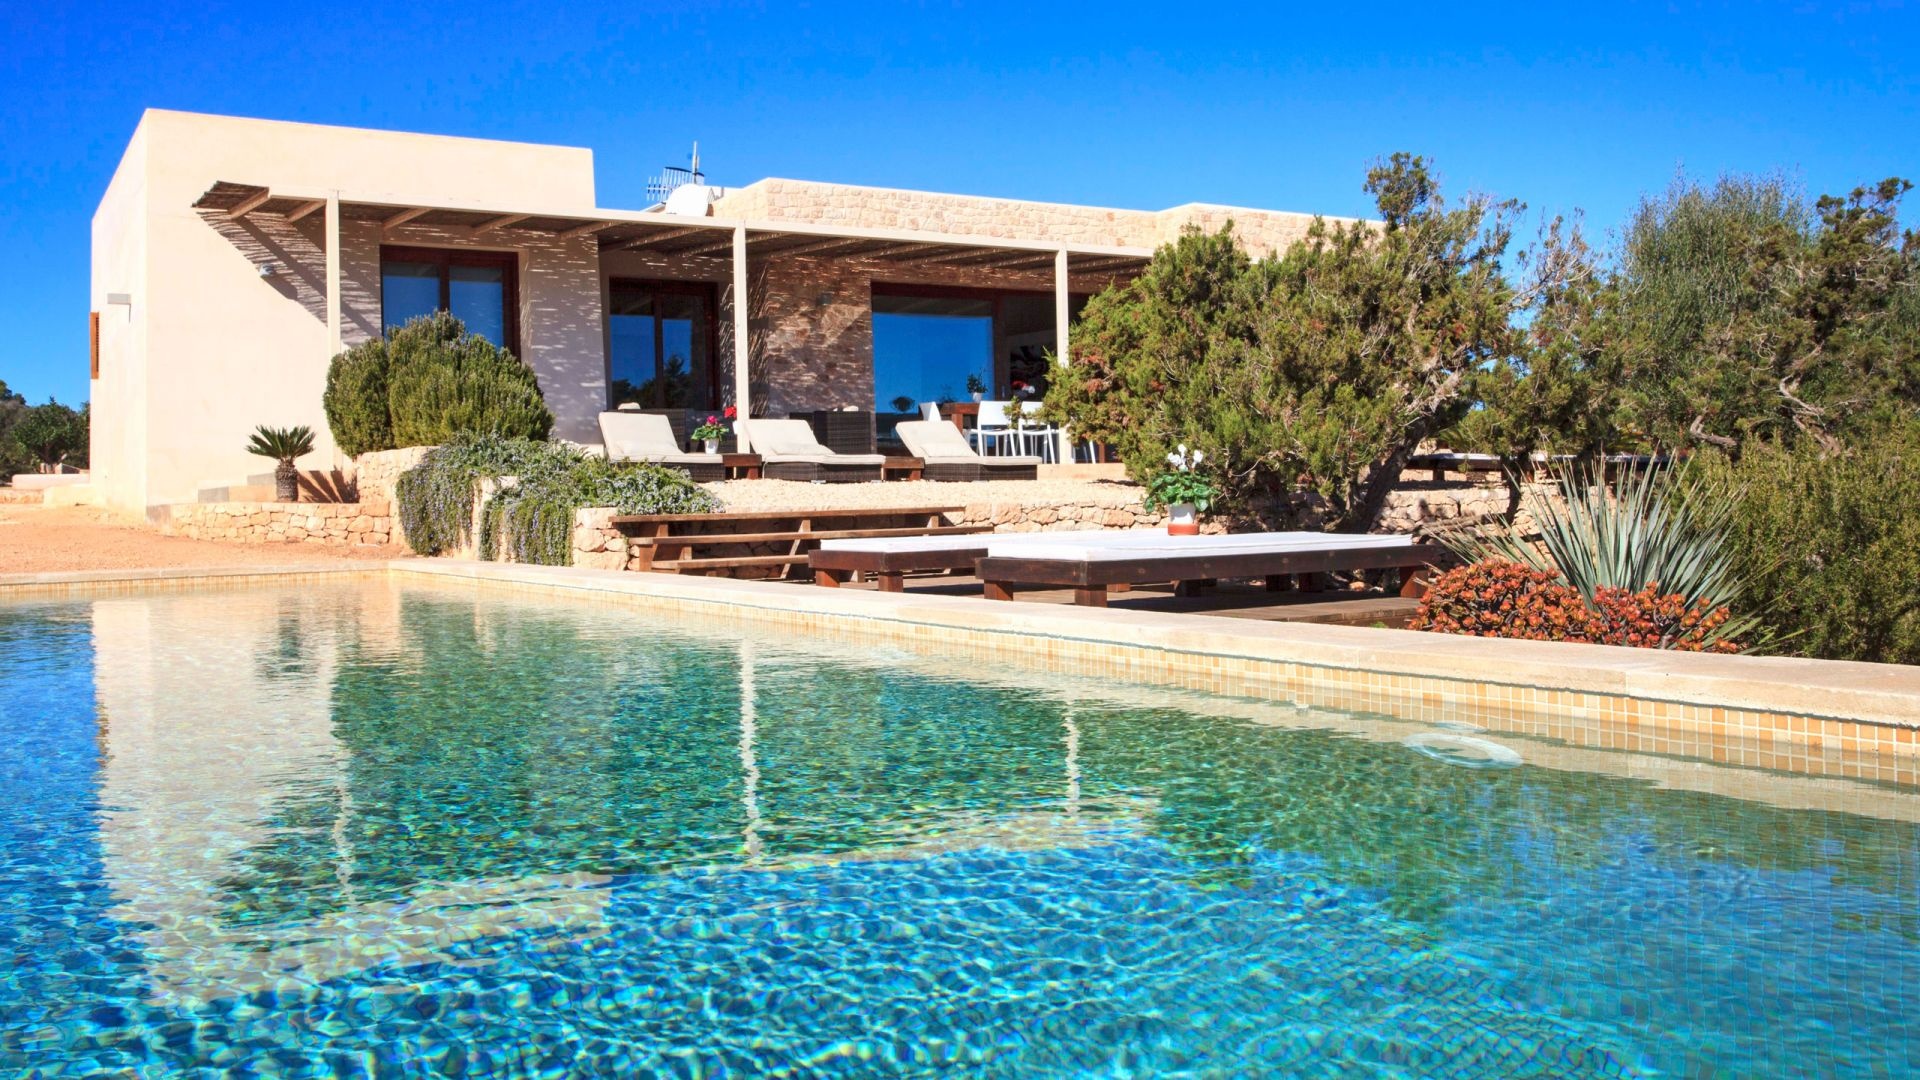 Ruby luxury villa, Private pool, Formentera getaway, Cap de barbaria, 1920x1080 Full HD Desktop